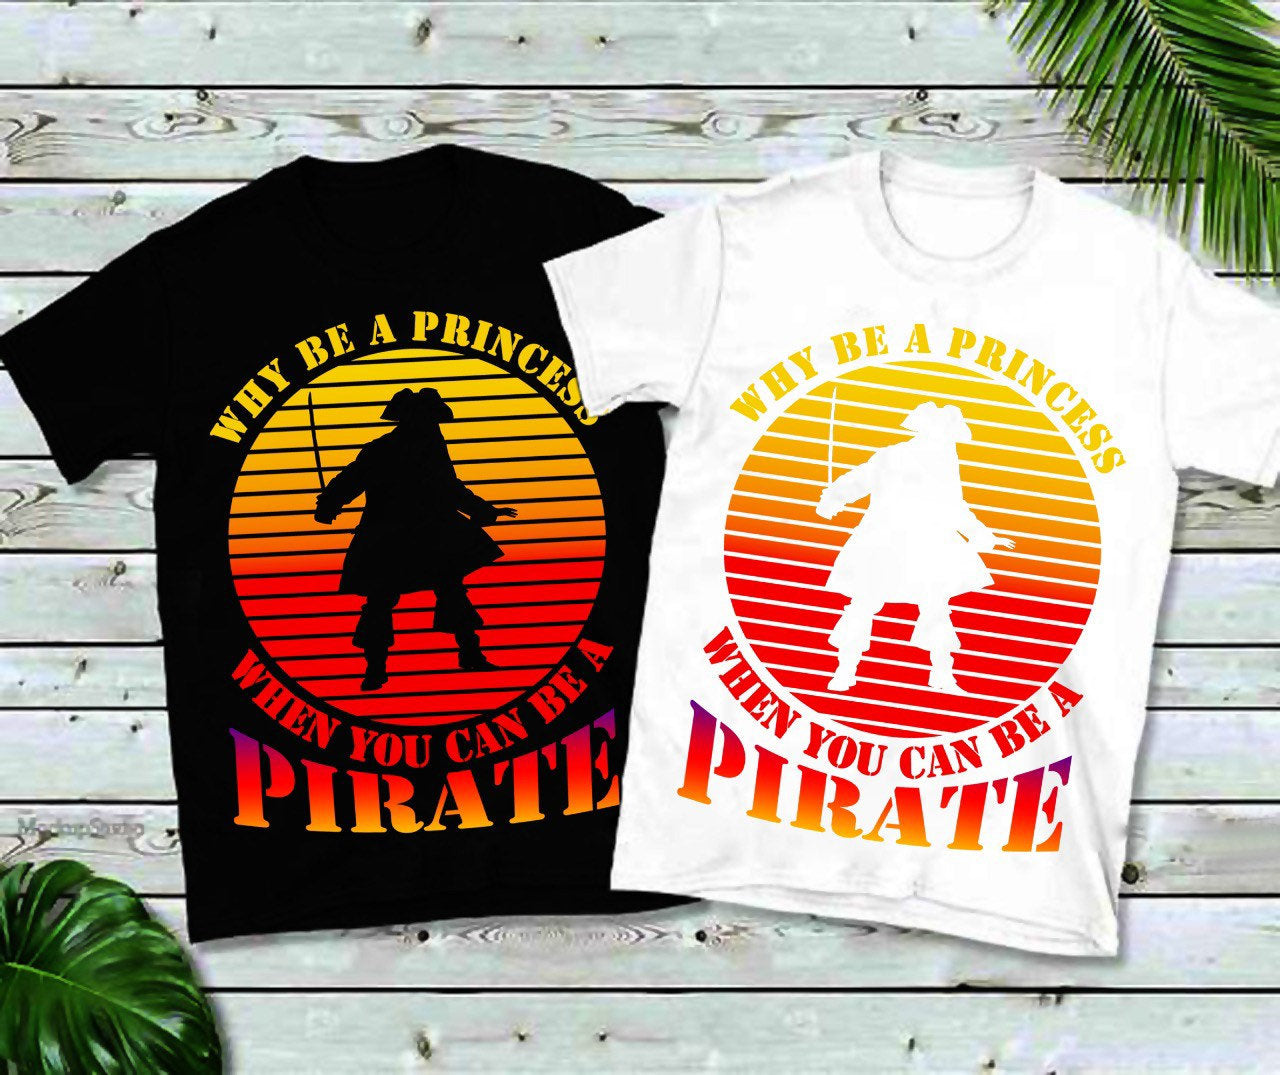 जब आप समुद्री डाकू बन सकते हैं तो राजकुमारी क्यों बनें | रेट्रो सनसेट टी-शर्ट, पाइरेट, फनी पाइरेट शर्ट - प्लसमिनस्को.कॉम